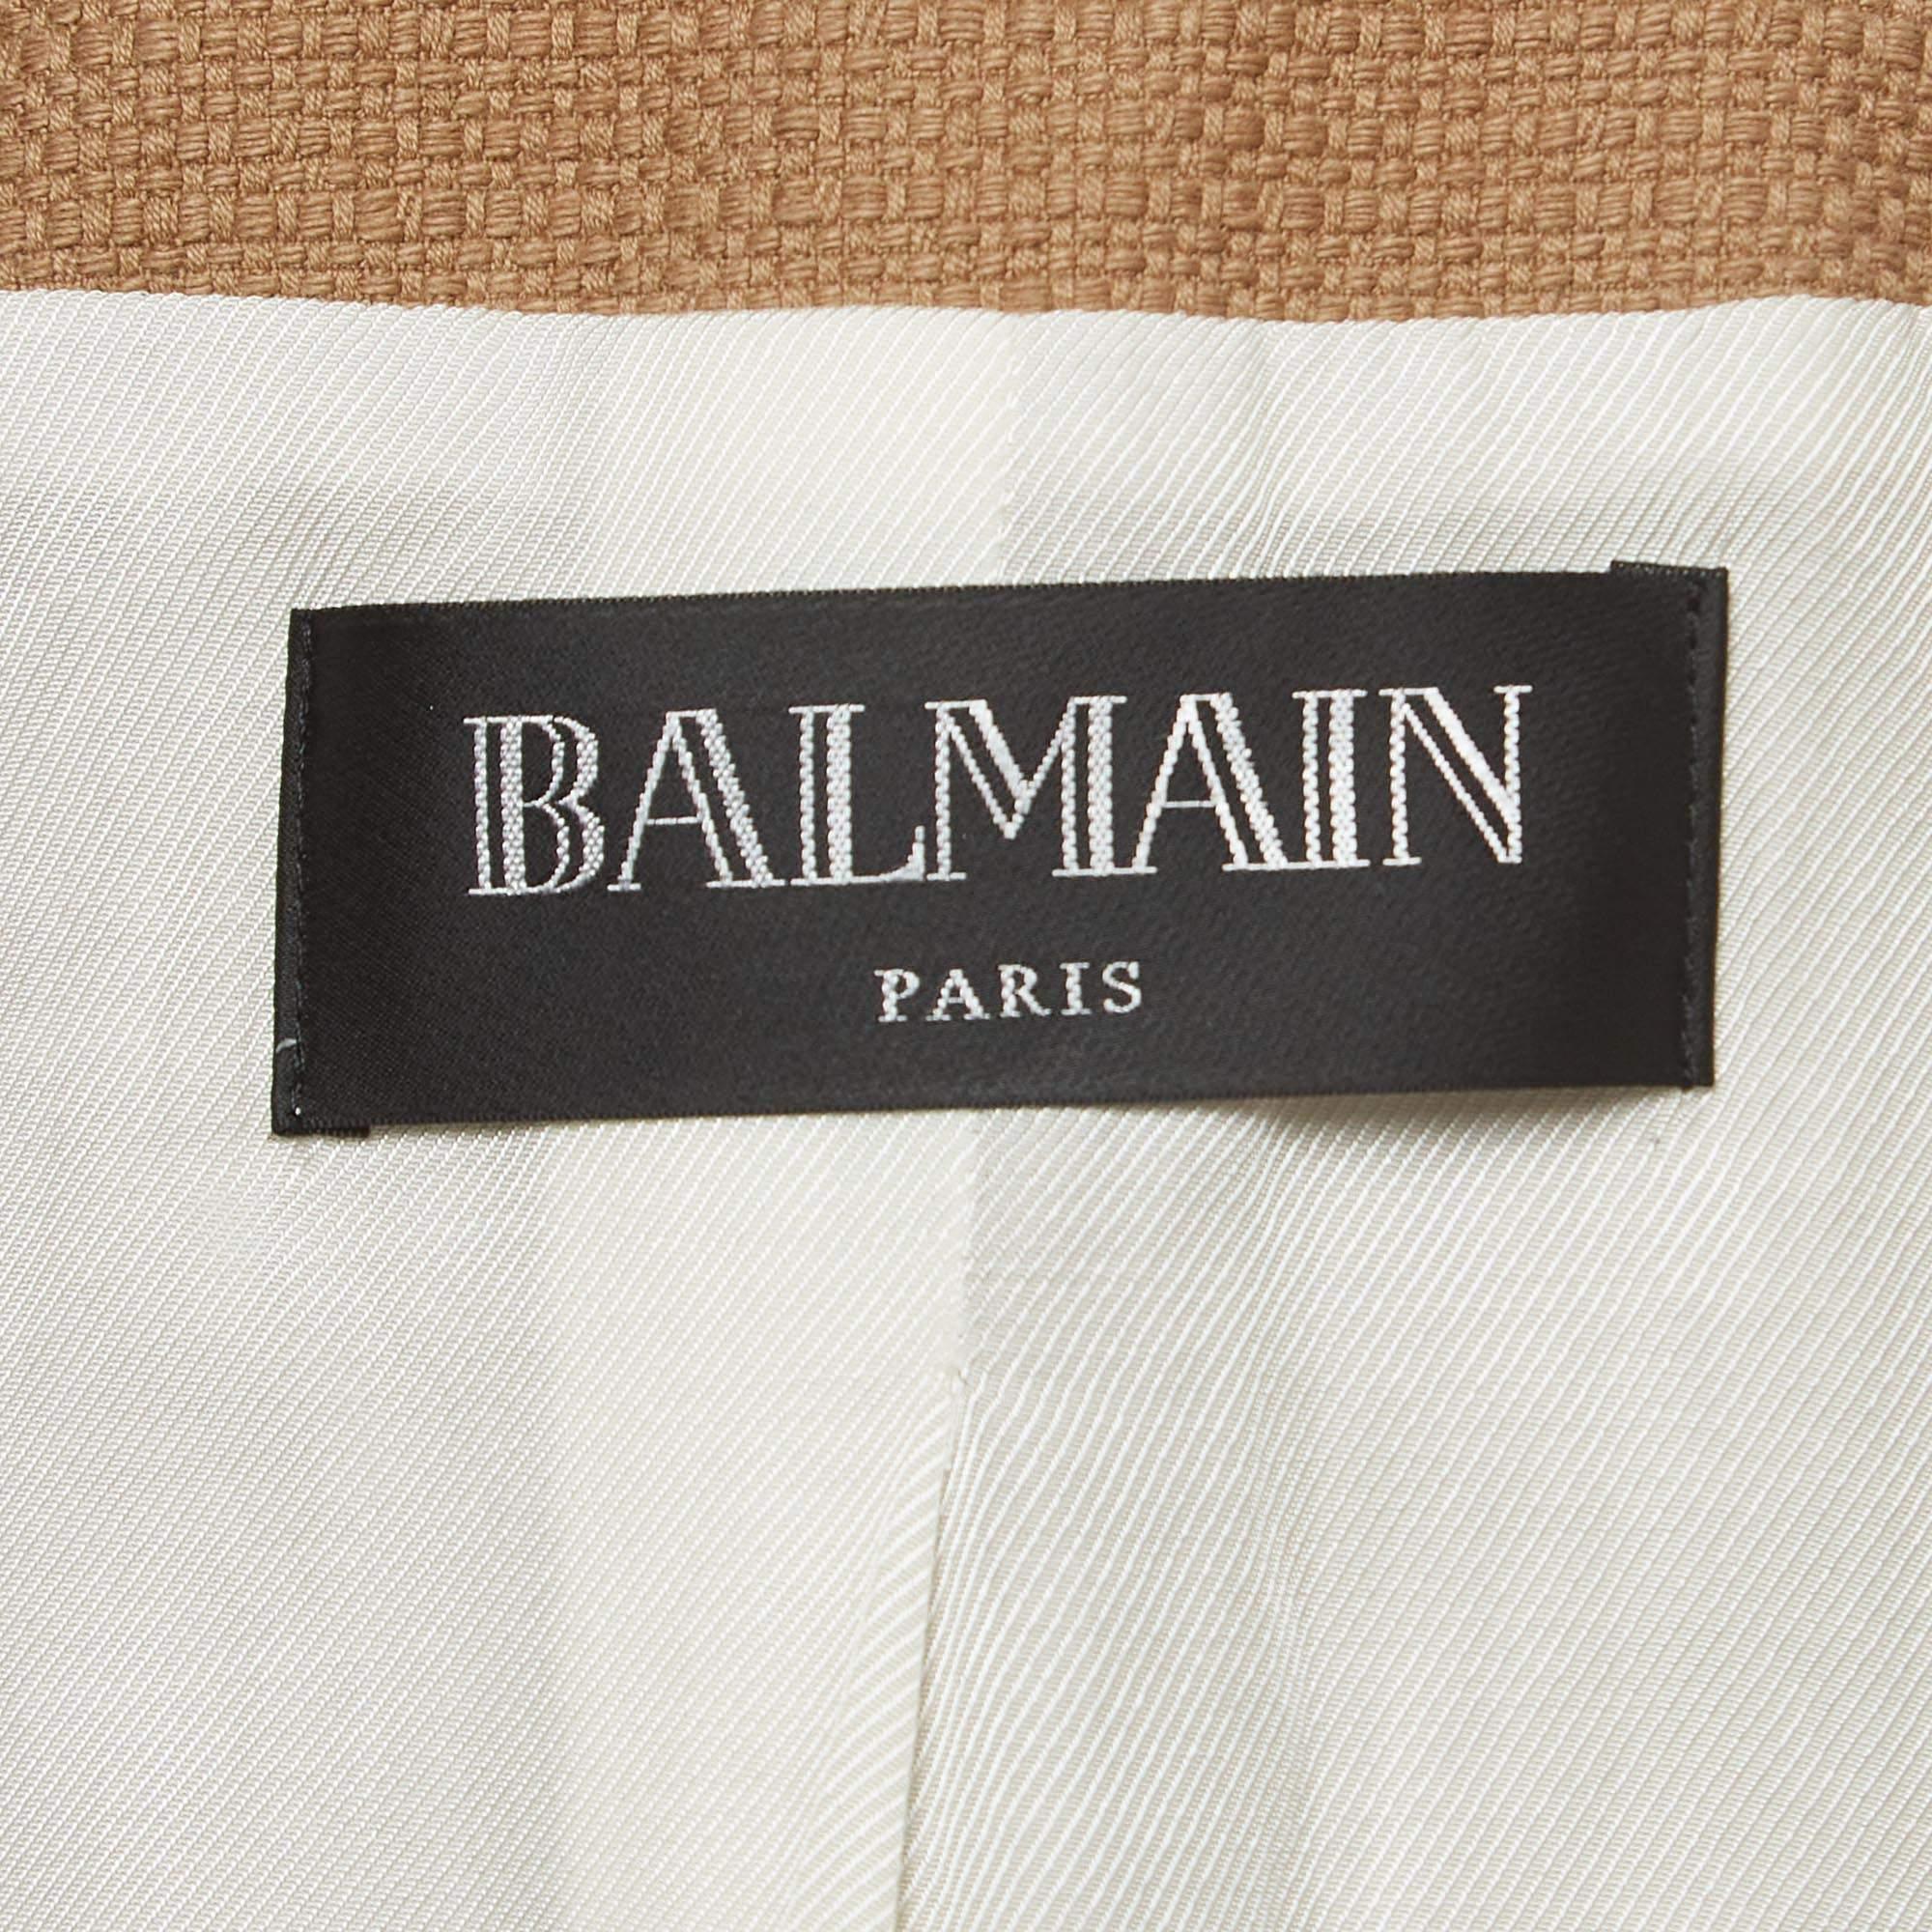 Balmain Beige Textured Cotton Double-Breasted Blazer M In Good Condition For Sale In Dubai, Al Qouz 2